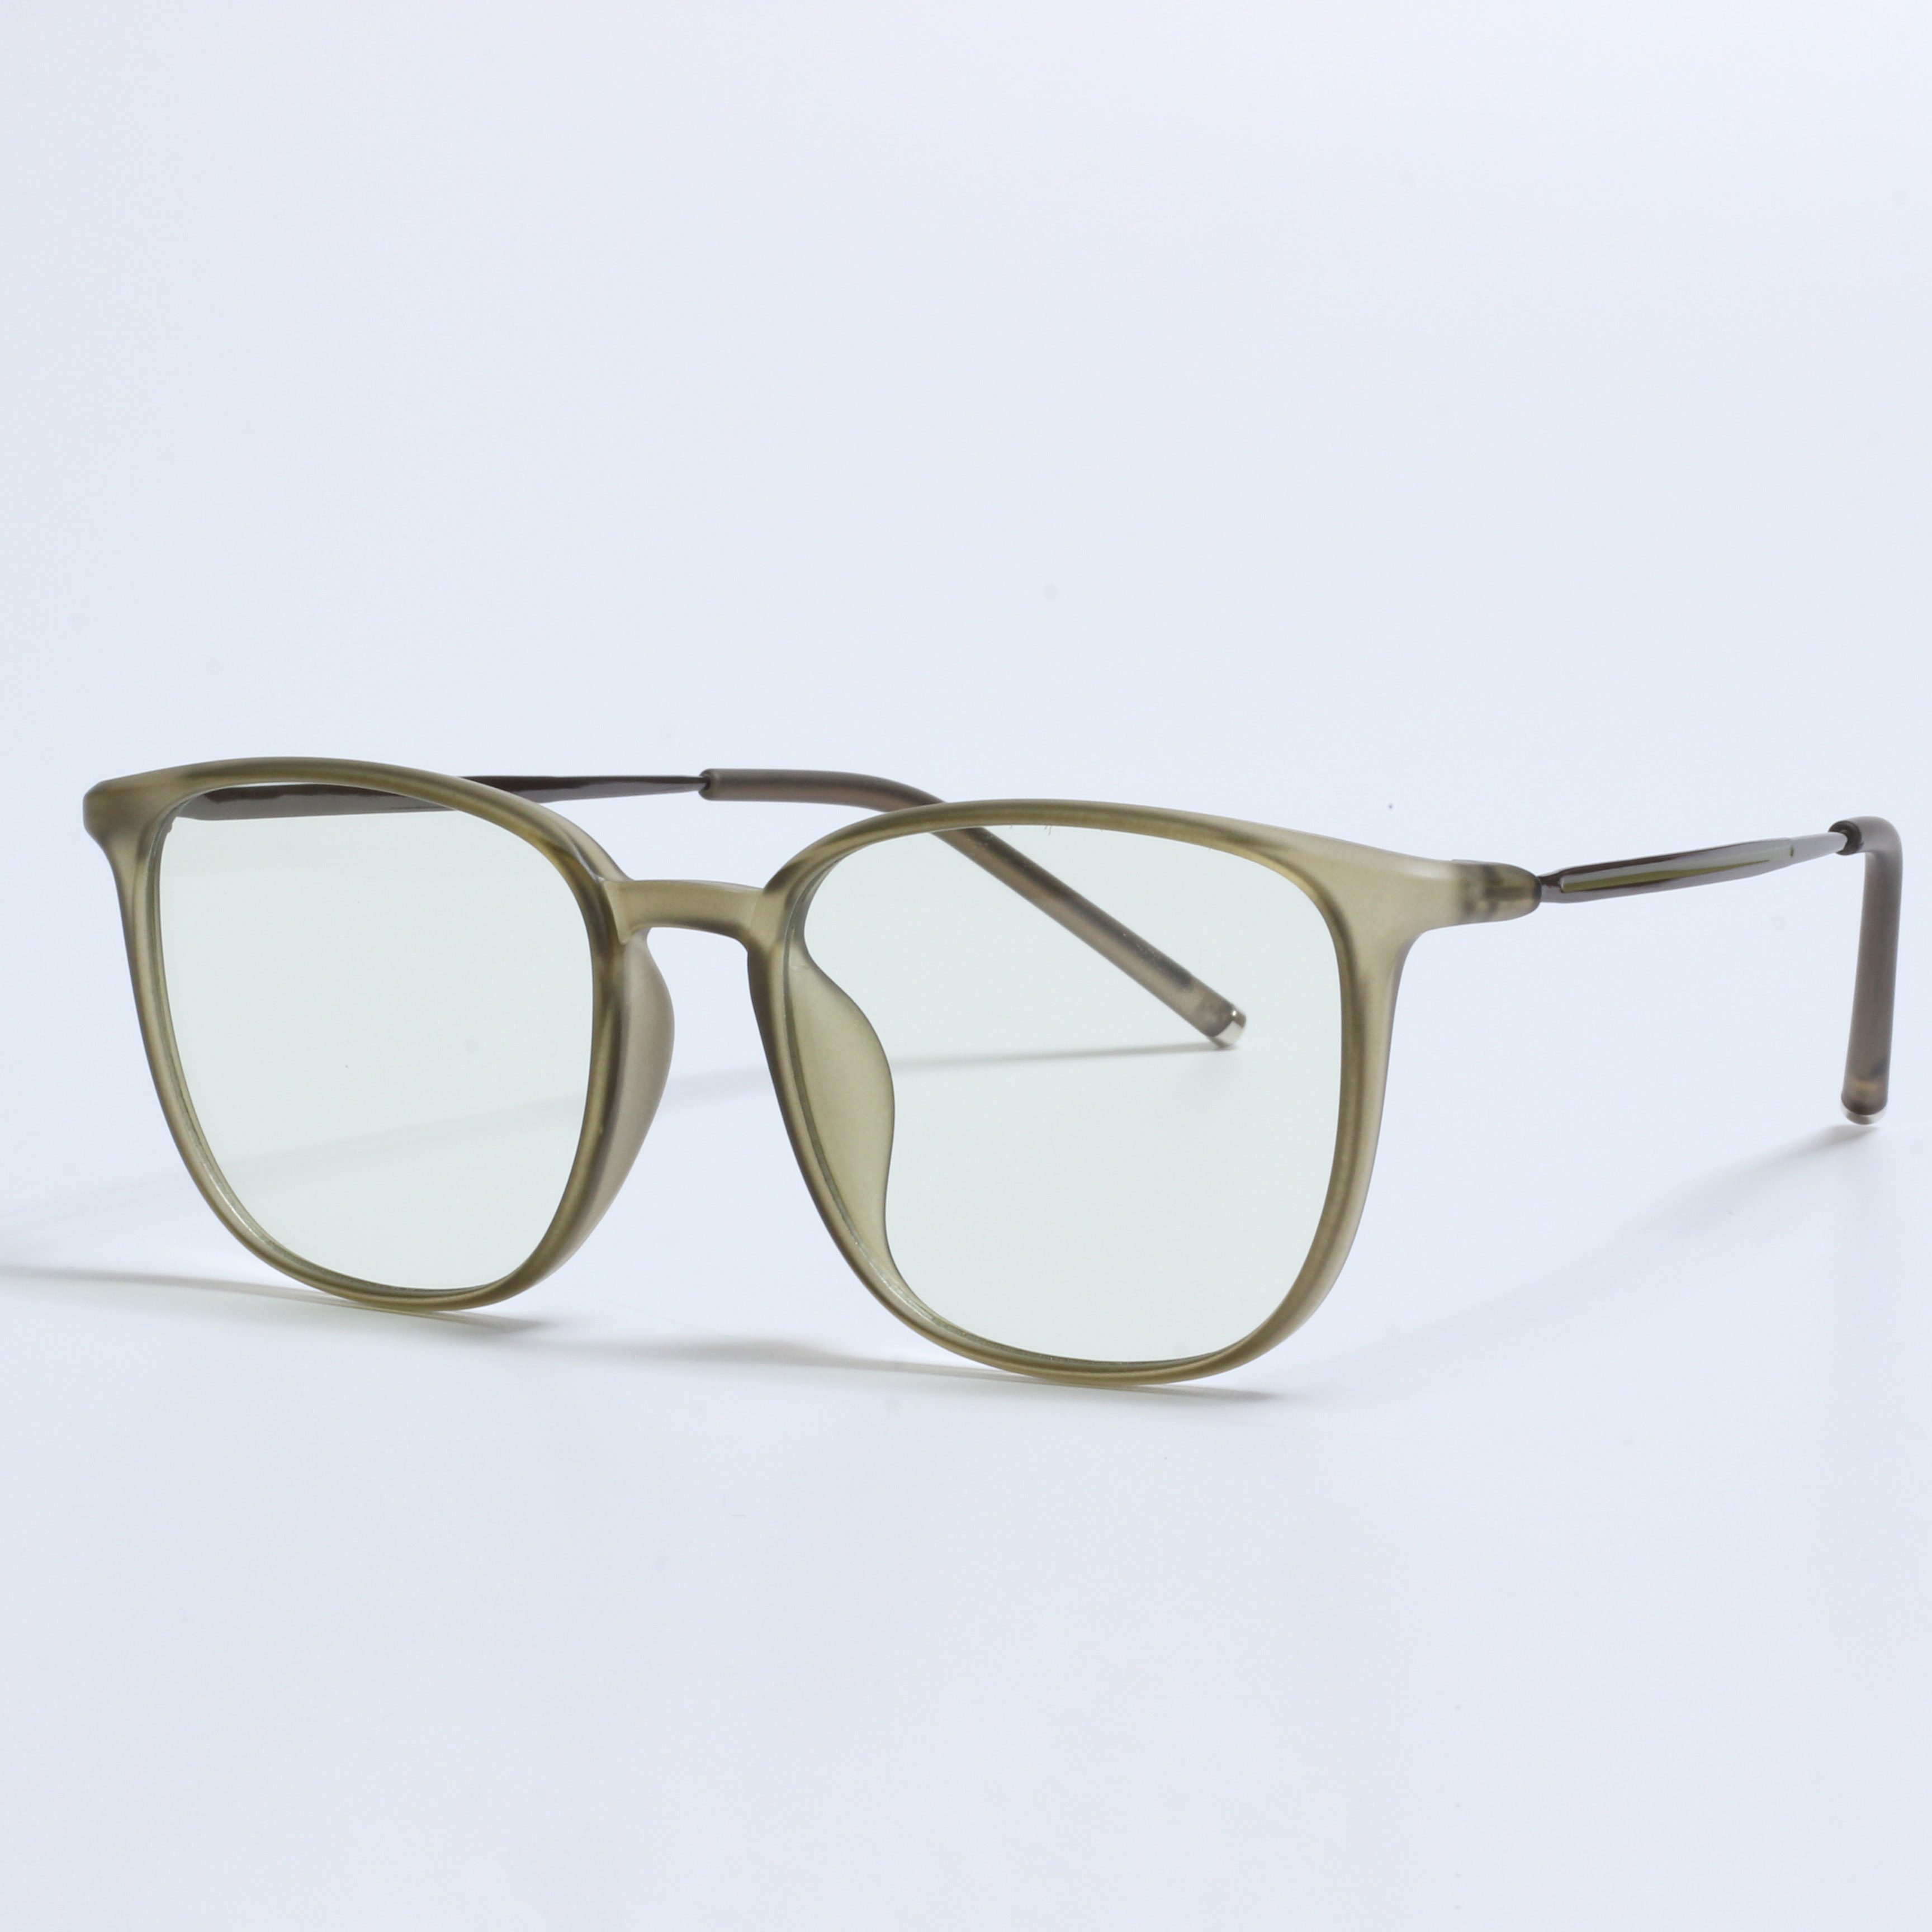 Bag-ong retro lunette anti lumiere designer nga reseta nga baso (5)